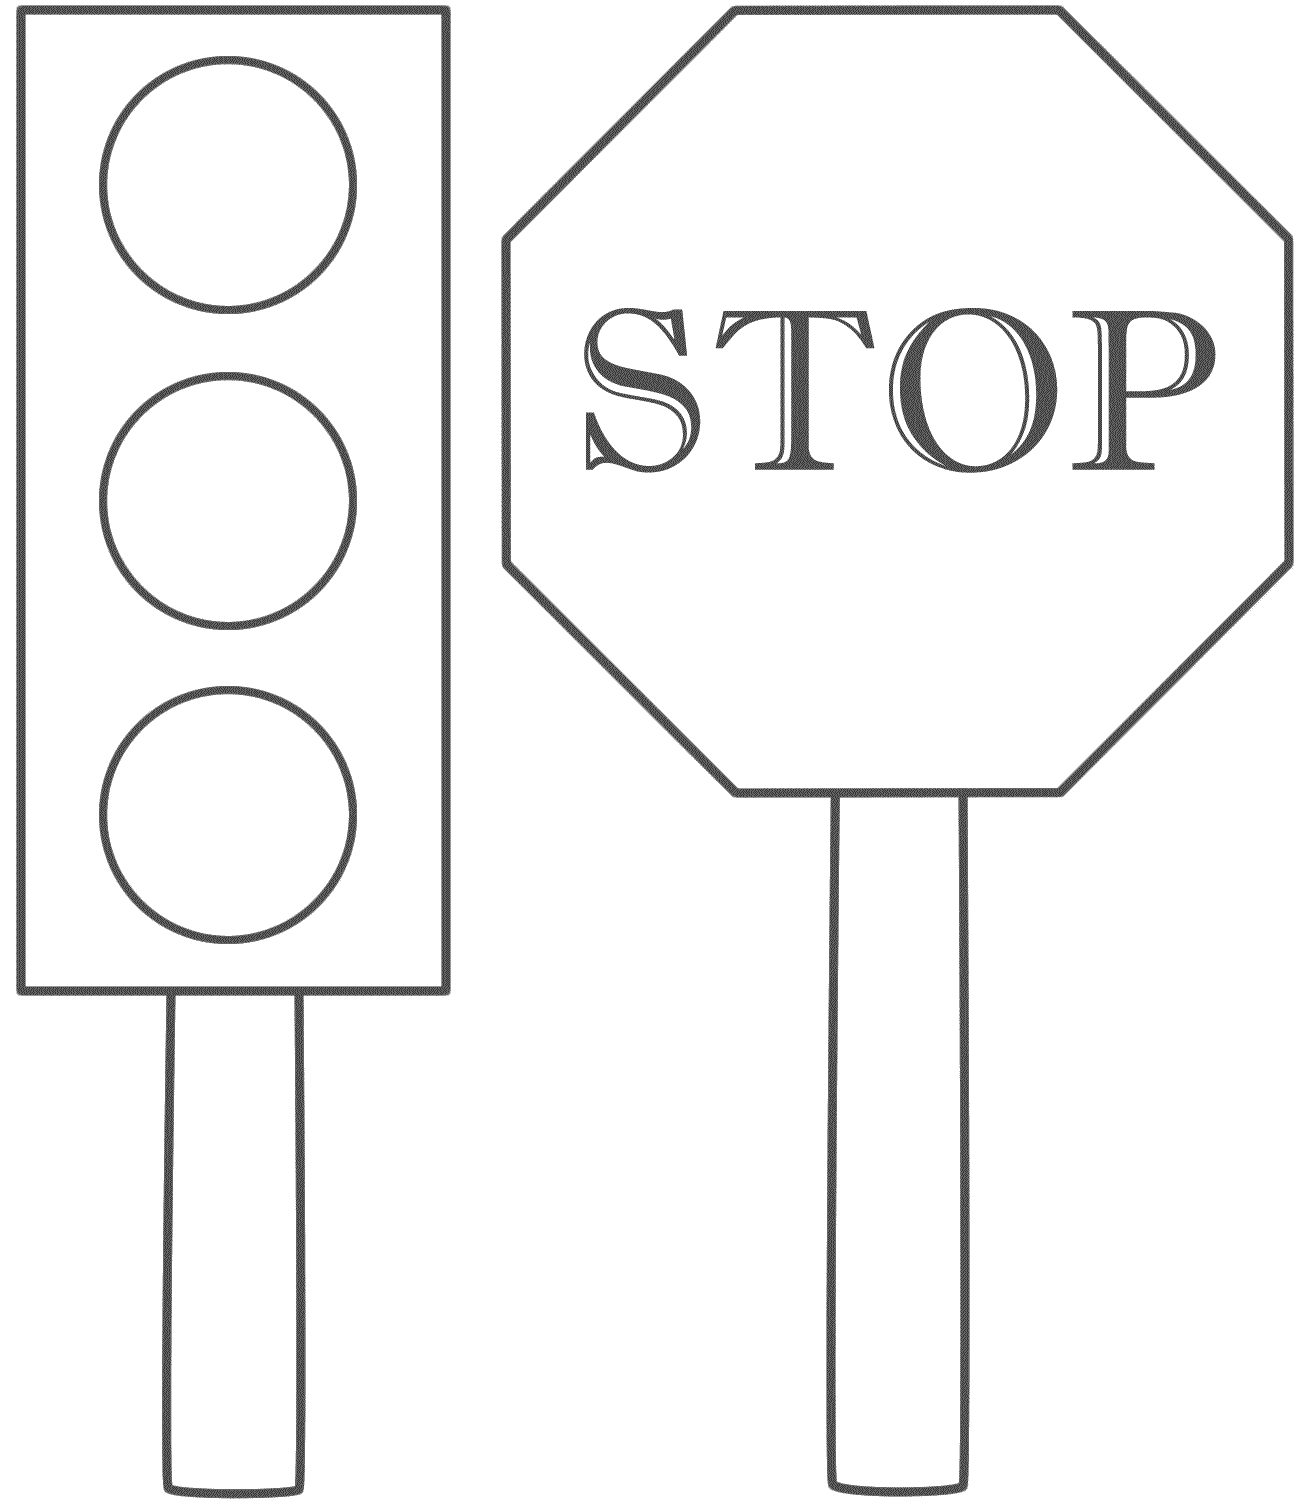 traffic lights stop sign coloring page doprava pinterest medium